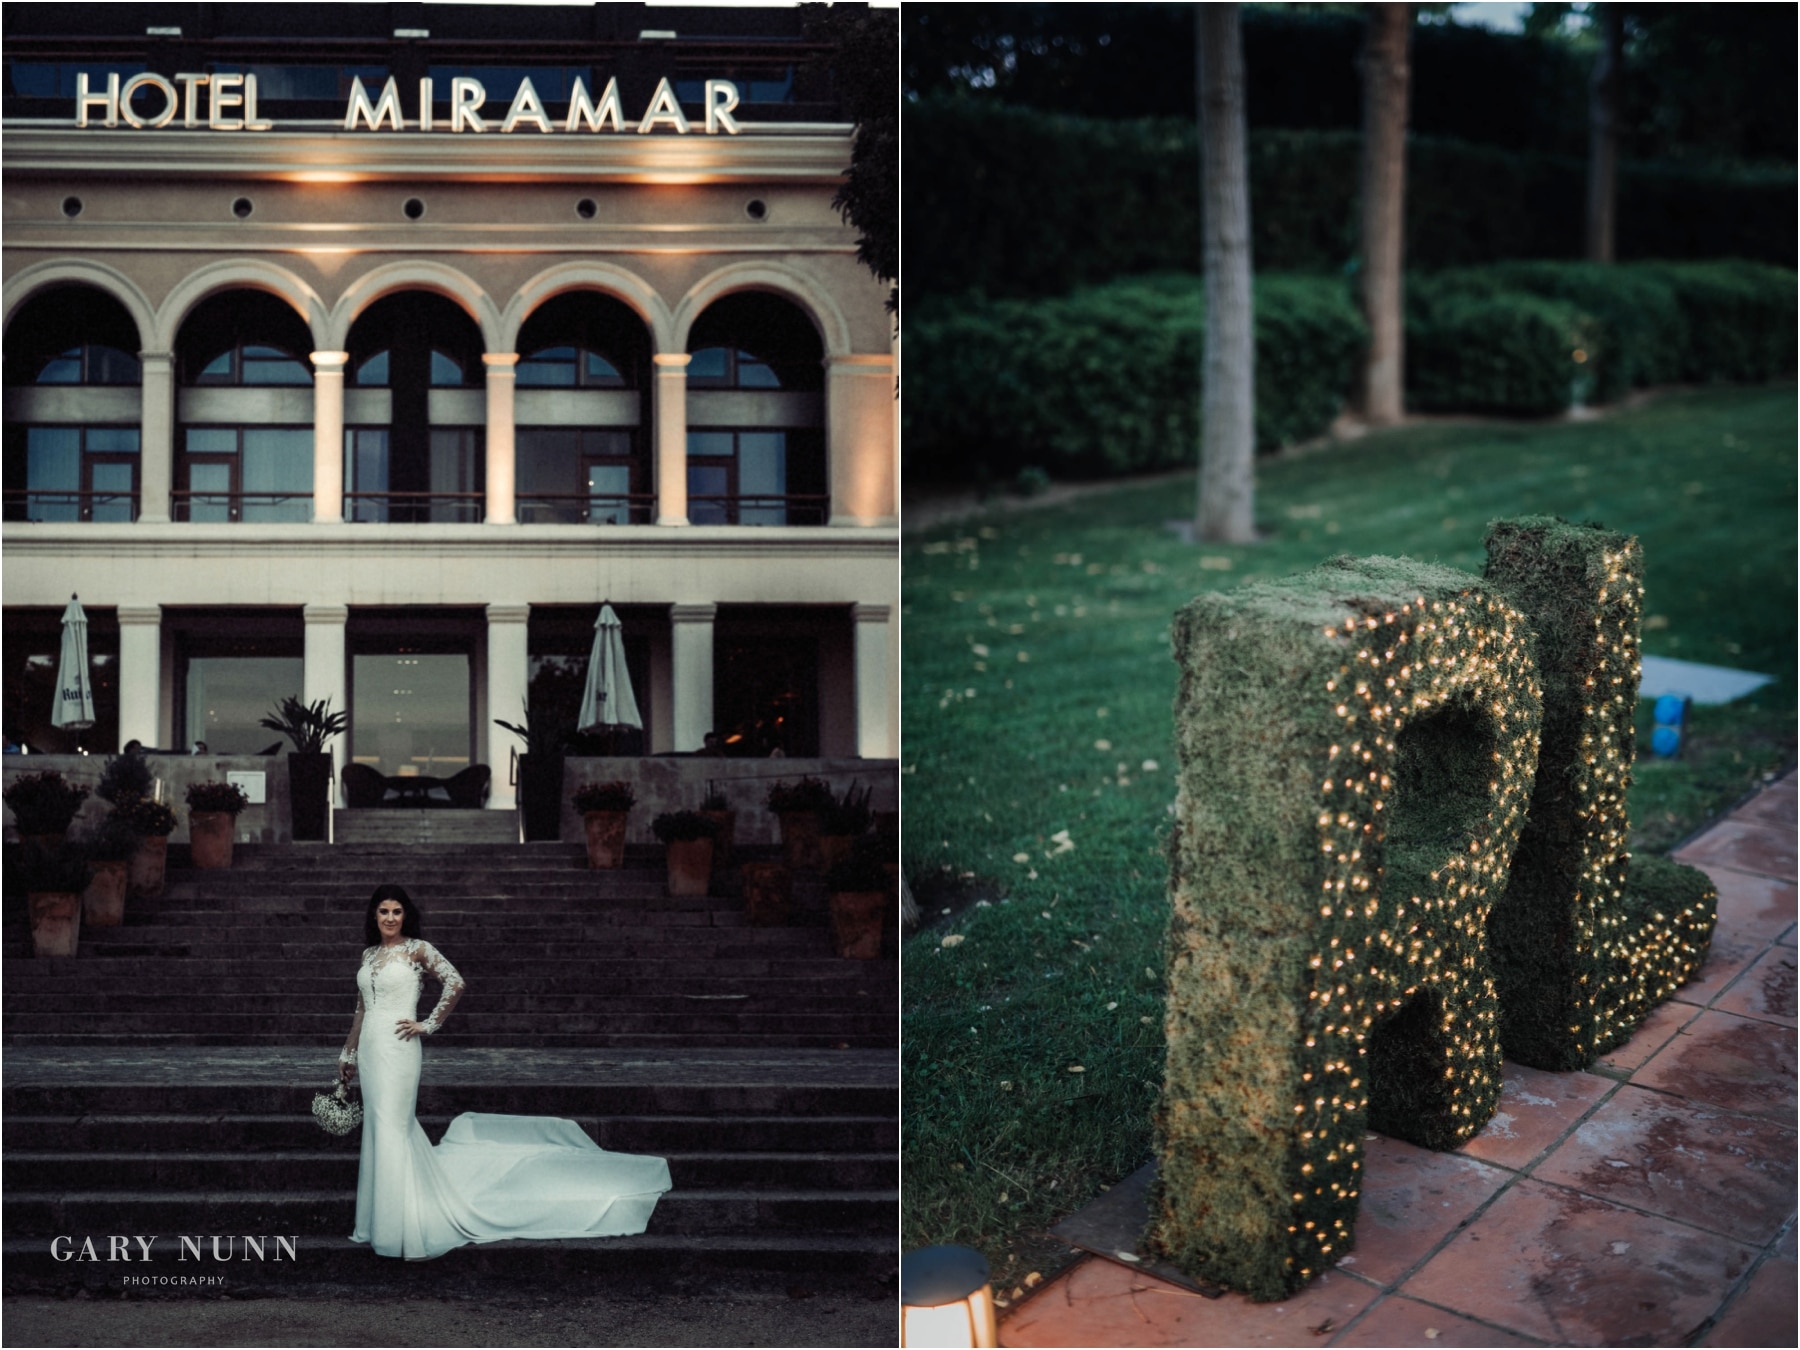 Hotel Miramar in Barcelona, destination wedding photographer, wedding photographer Milton Keynes, wedding photographer Watford, Wedding photographer, destination wedding photographer Spain